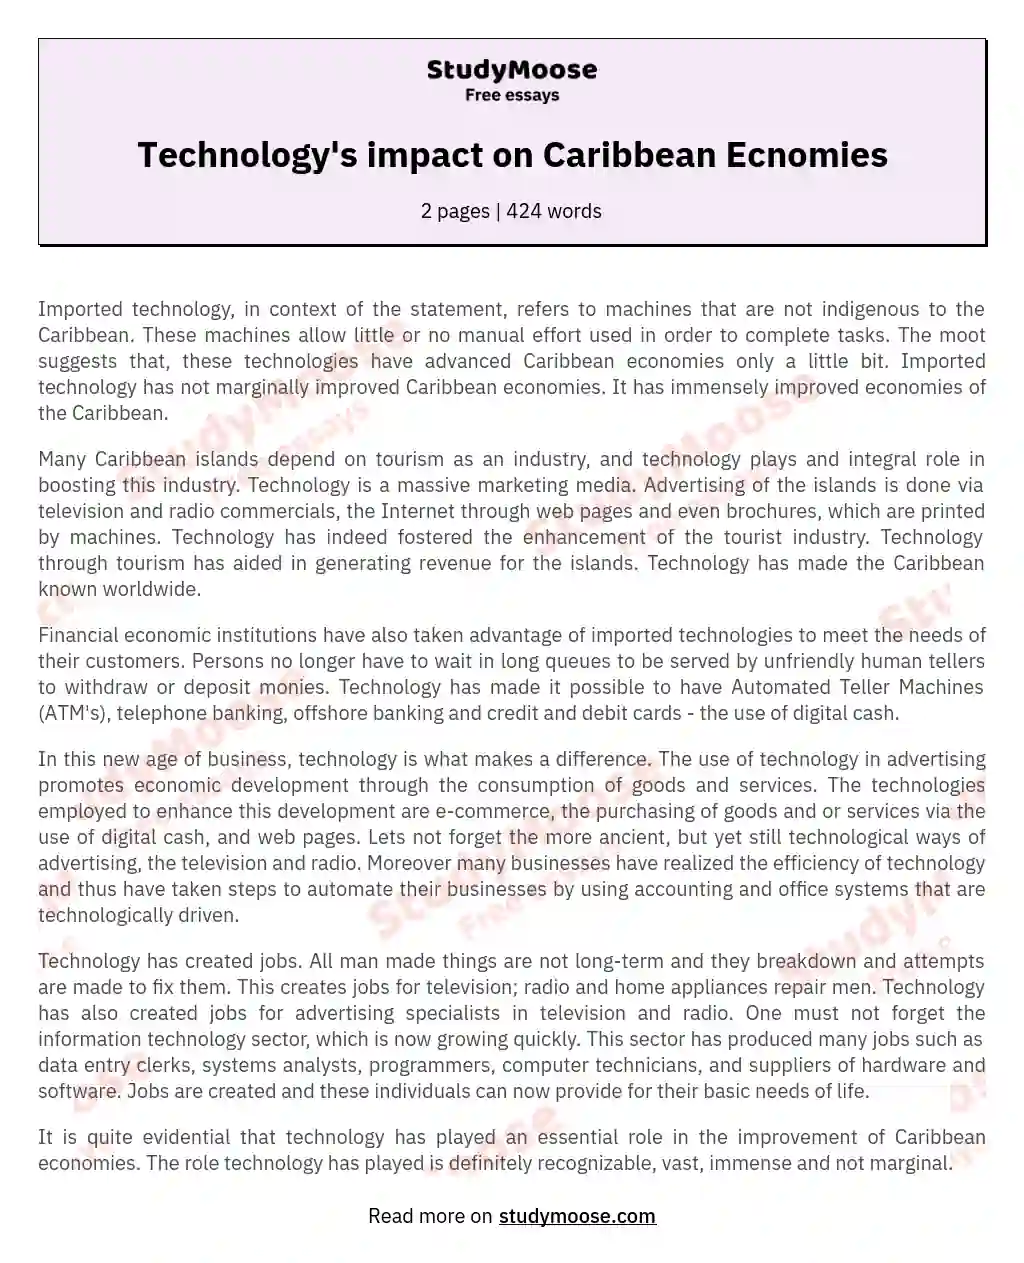 Technology's impact on Caribbean Ecnomies essay